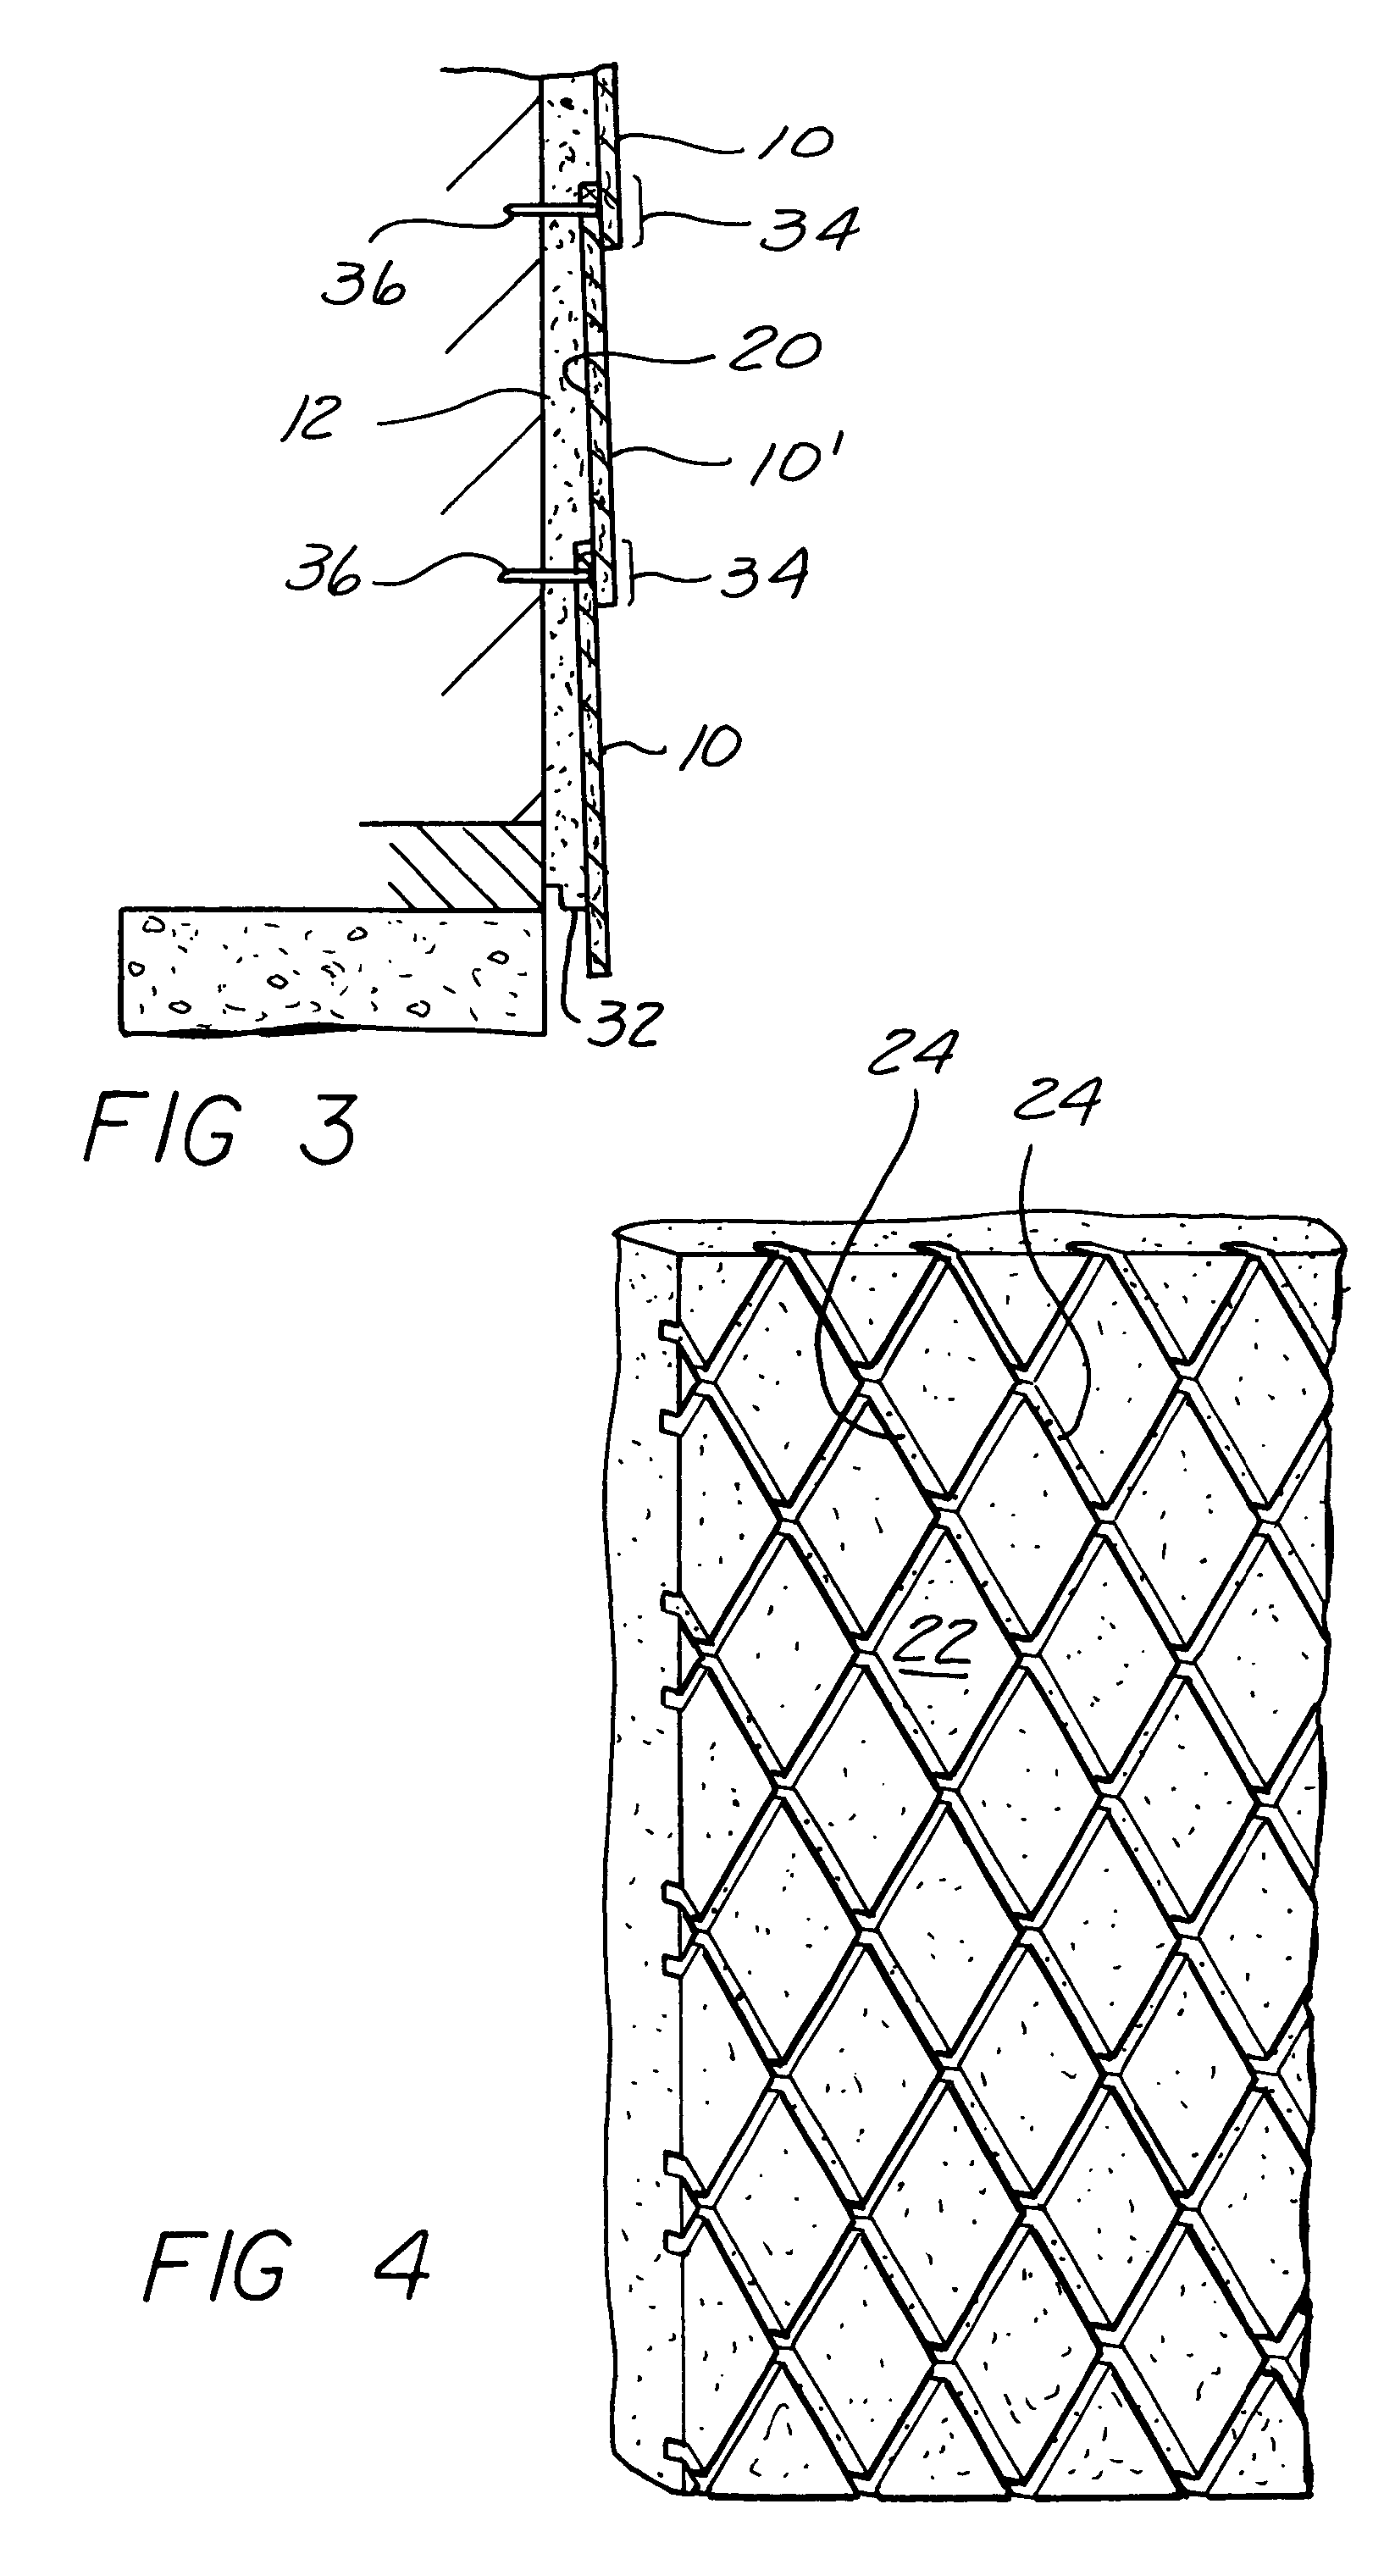 Insulated fiber cement siding